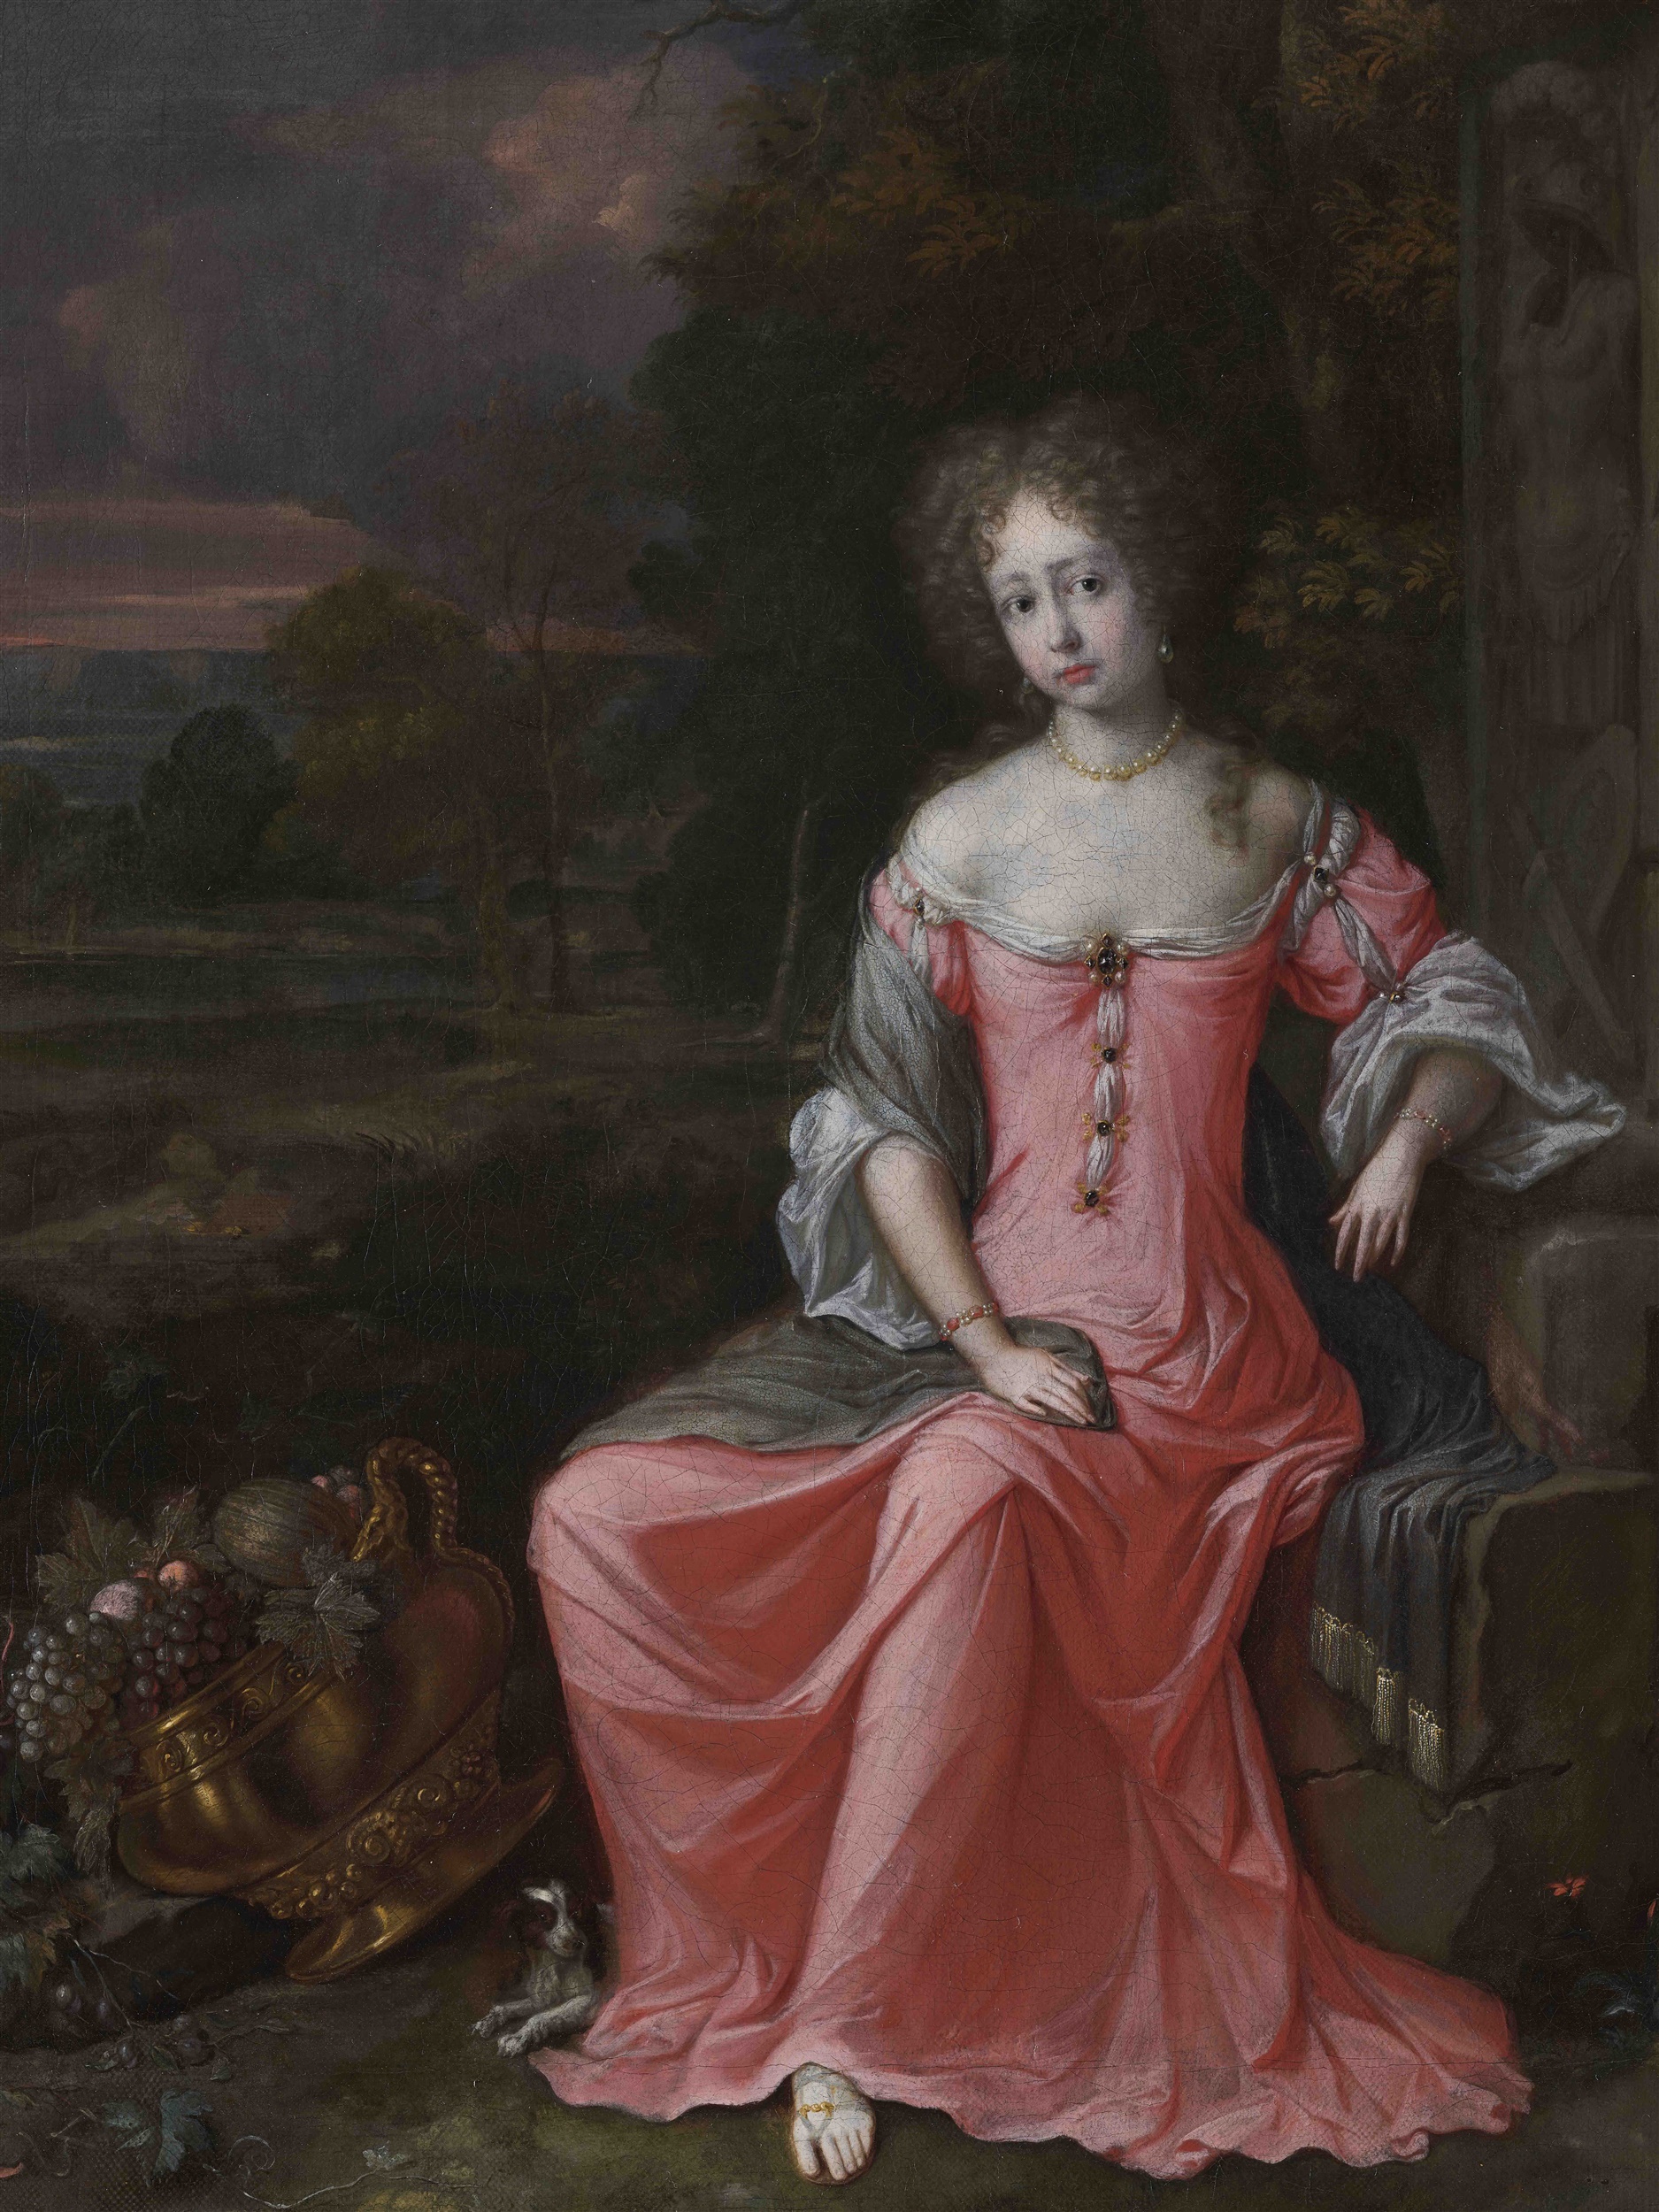 Anne Killigrew, Portrait of a Lady, probably the artist